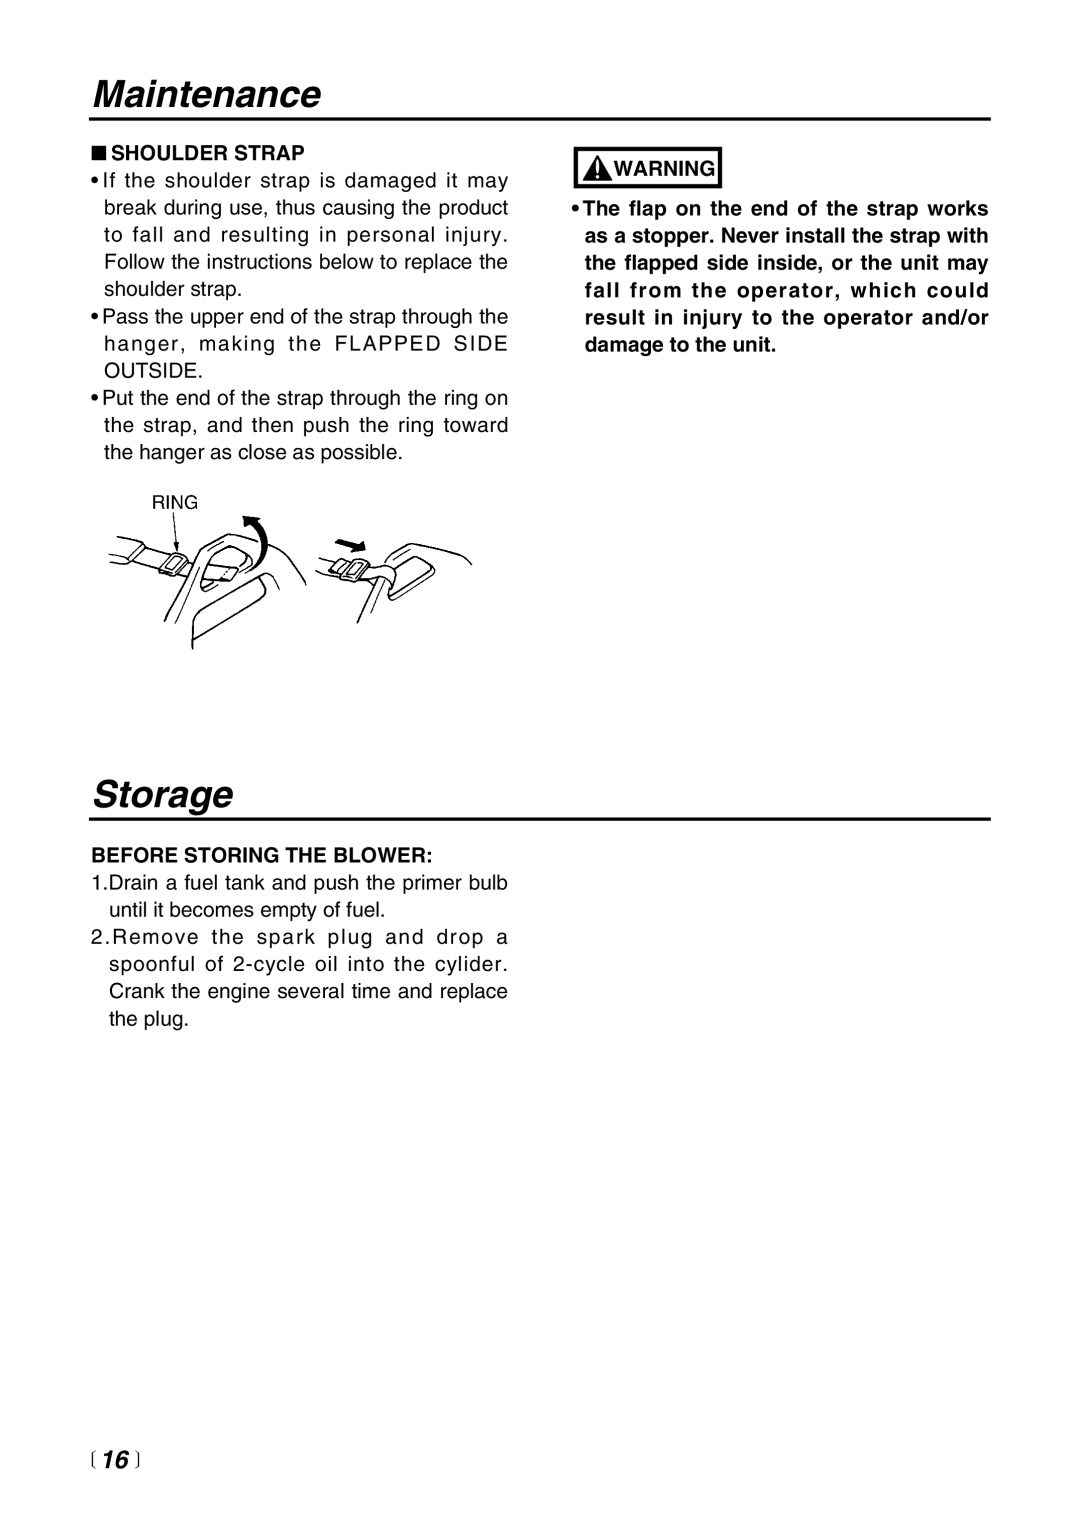 RedMax EB4401 manual Storage, Maintenance, 16 , Shoulder Strap, Before Storing The Blower 